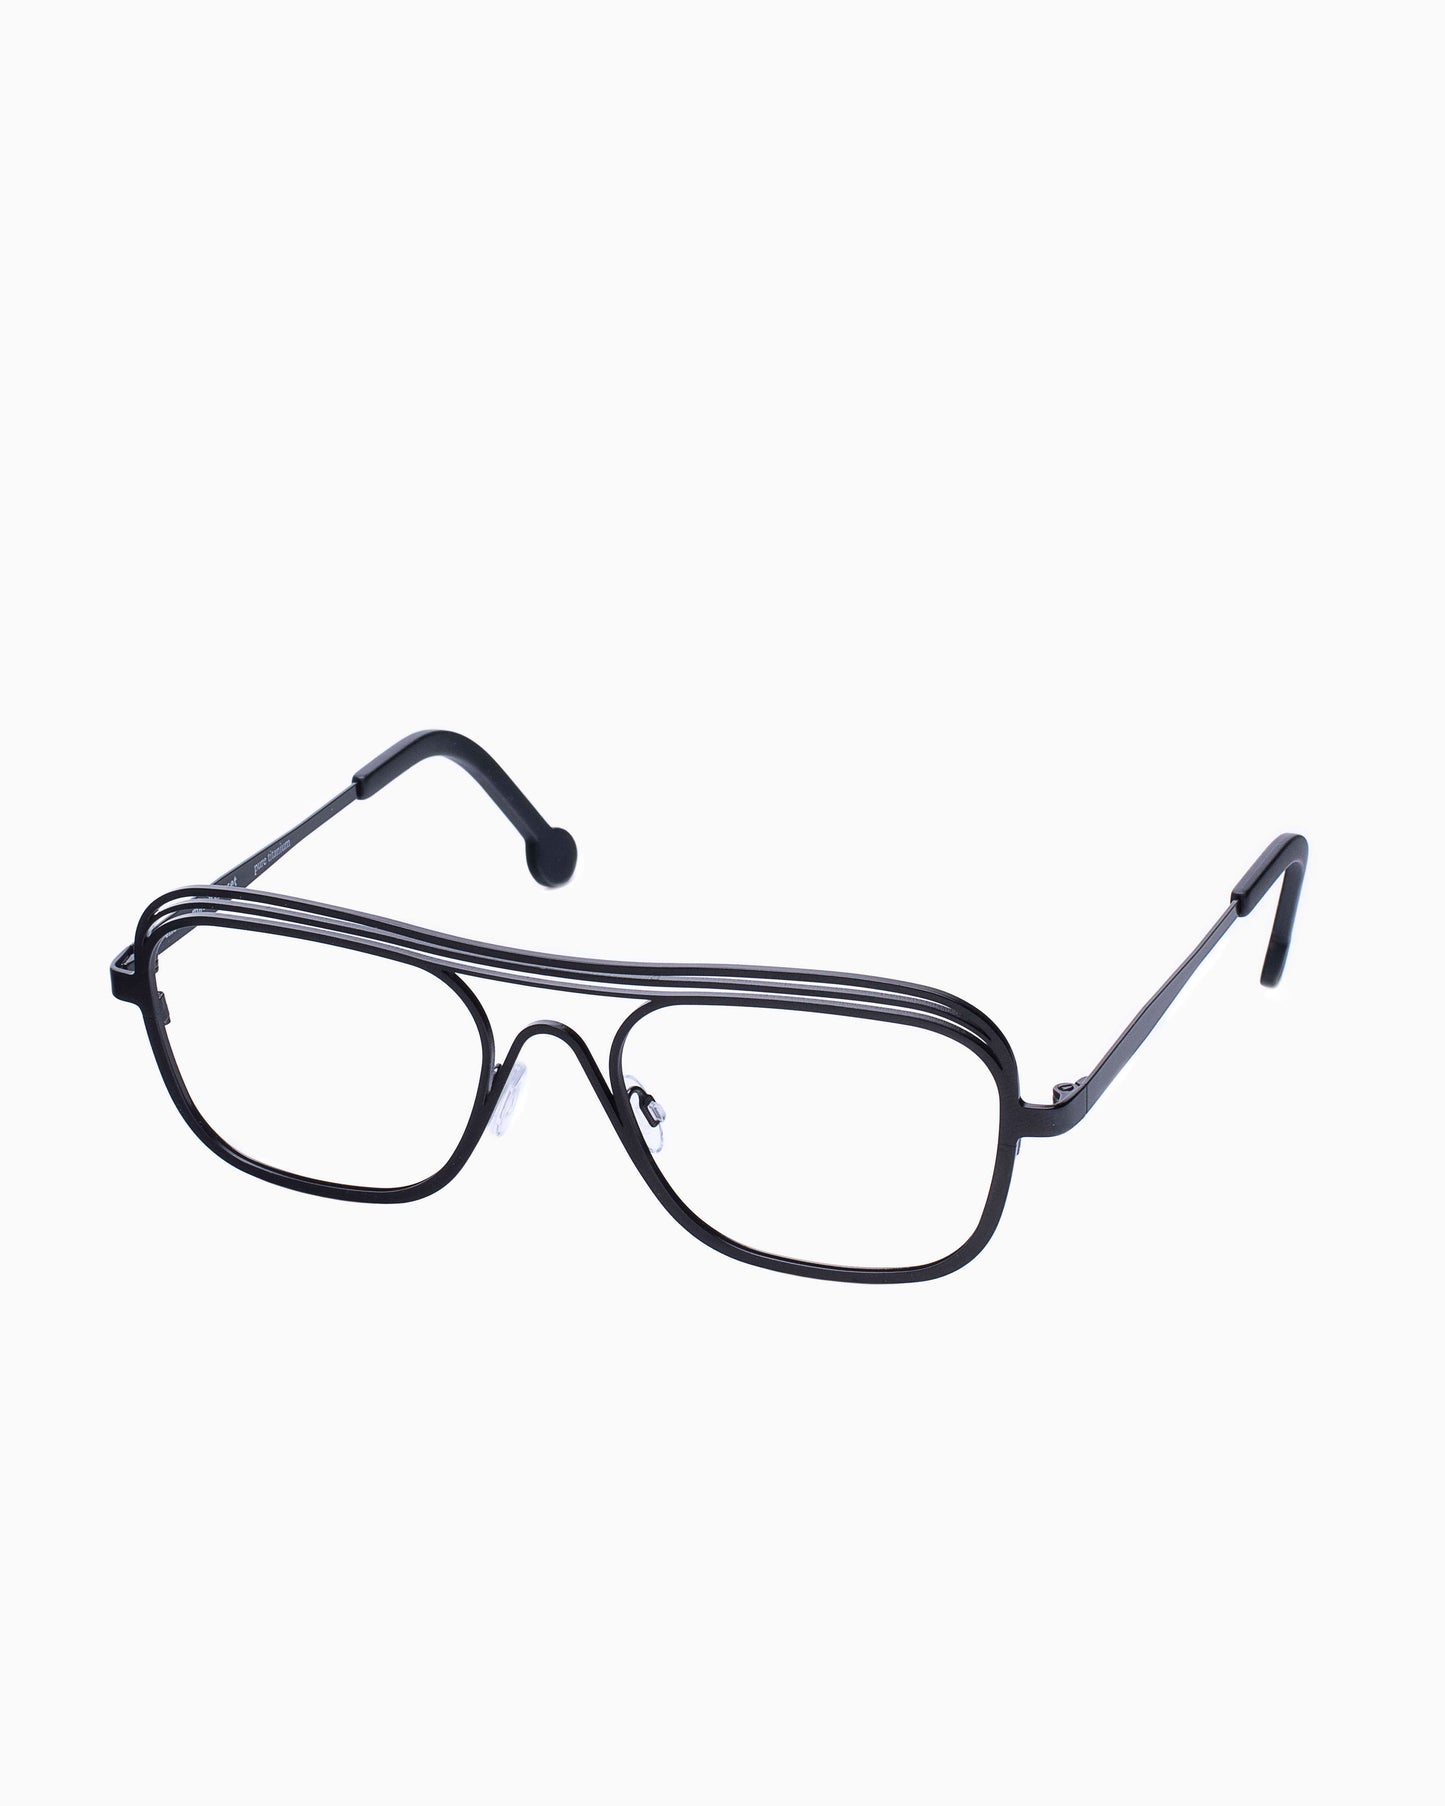 Theo - Exchange - 367 | glasses bar